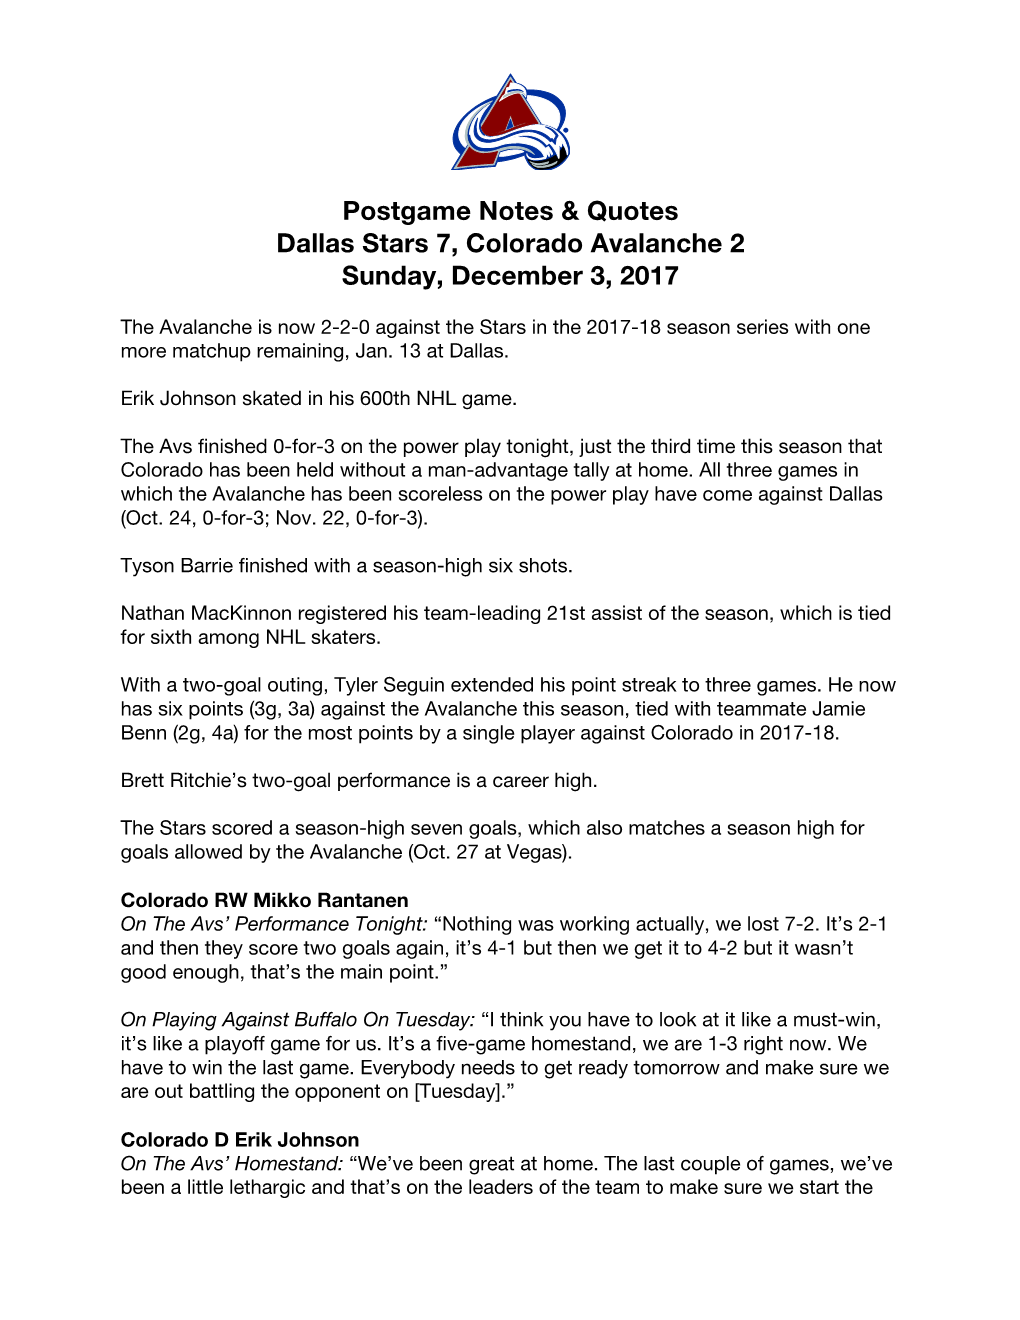 Postgame Notes & Quotes Dallas Stars 7, Colorado Avalanche 2